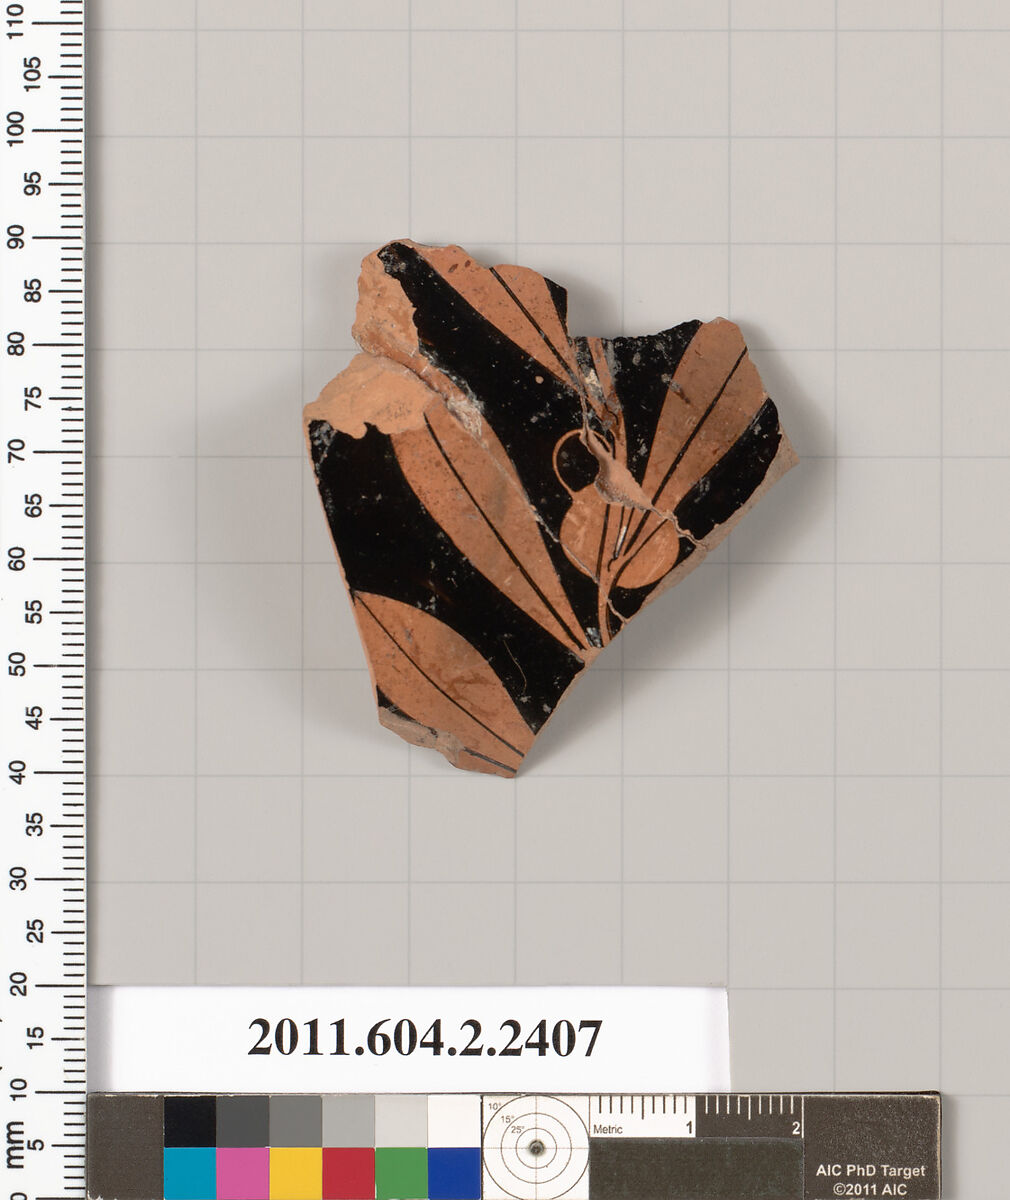 Terracotta fragment of a rhyton (vase for libations or drinking), Terracotta, Greek, Attic 